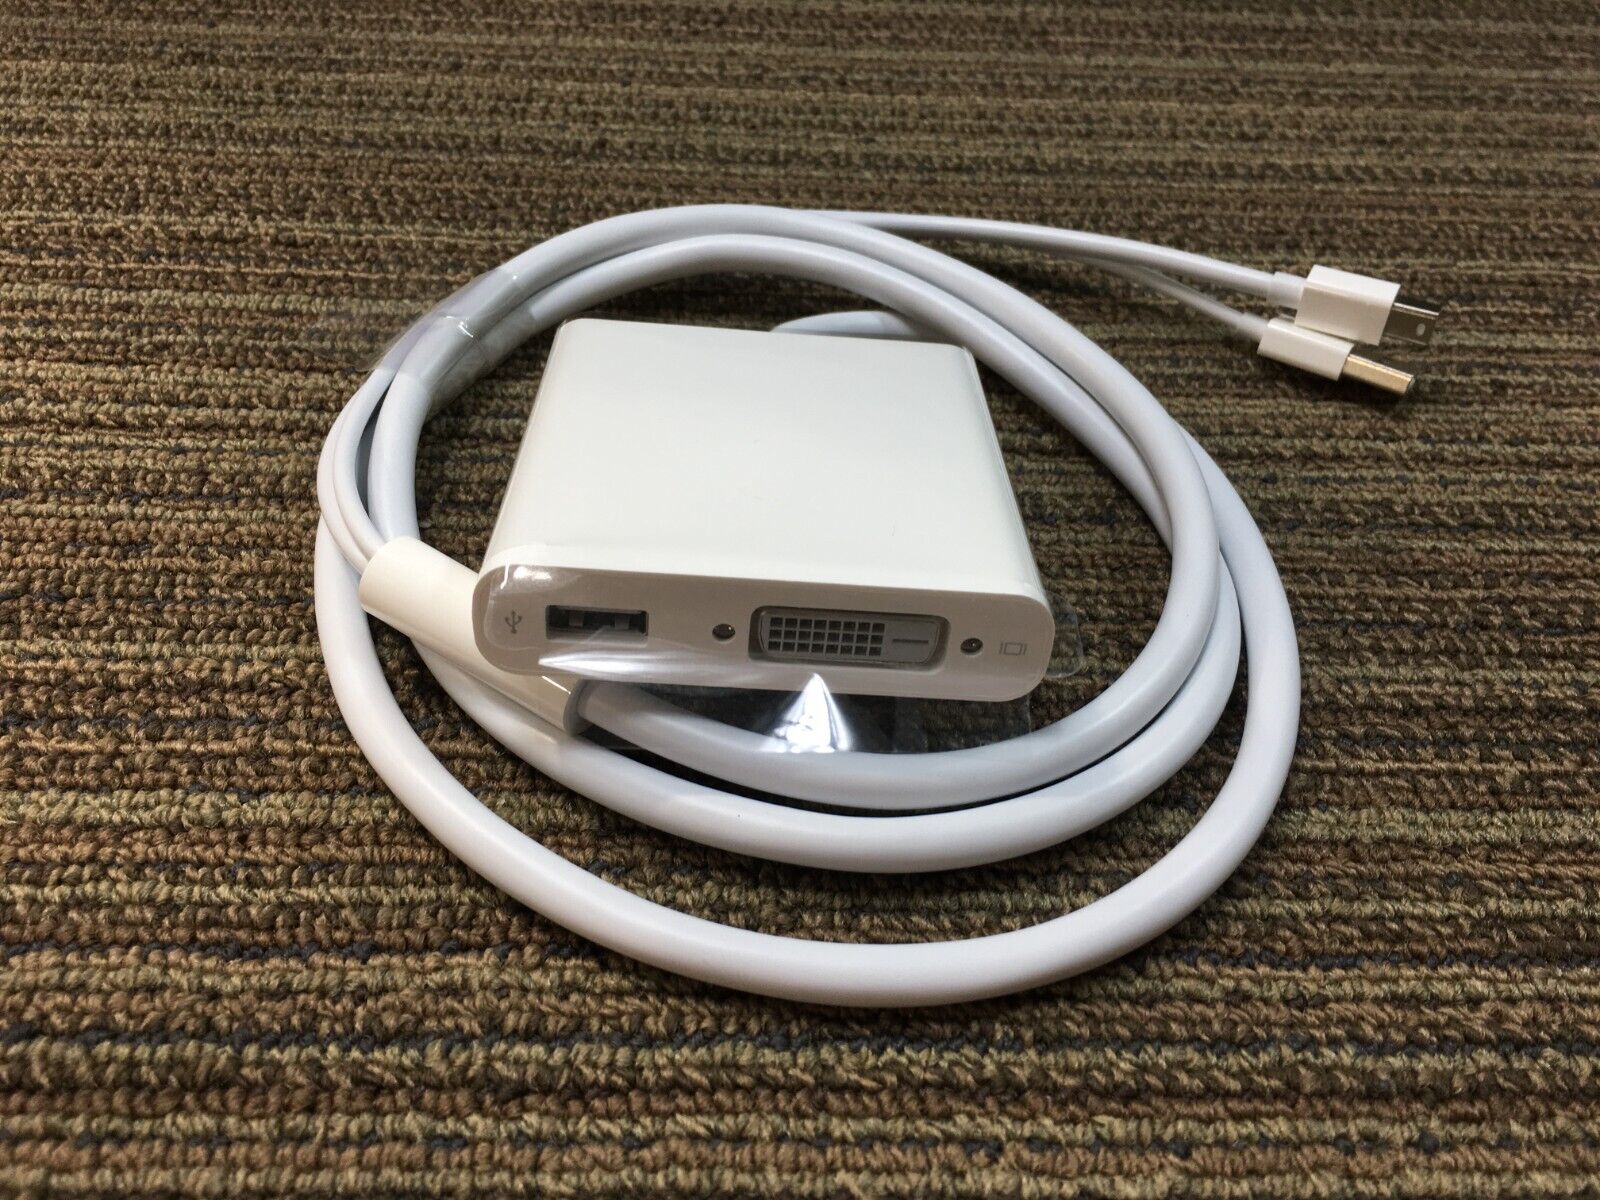 Apple Mini Display Port to Dual-link DVI Adapter - White